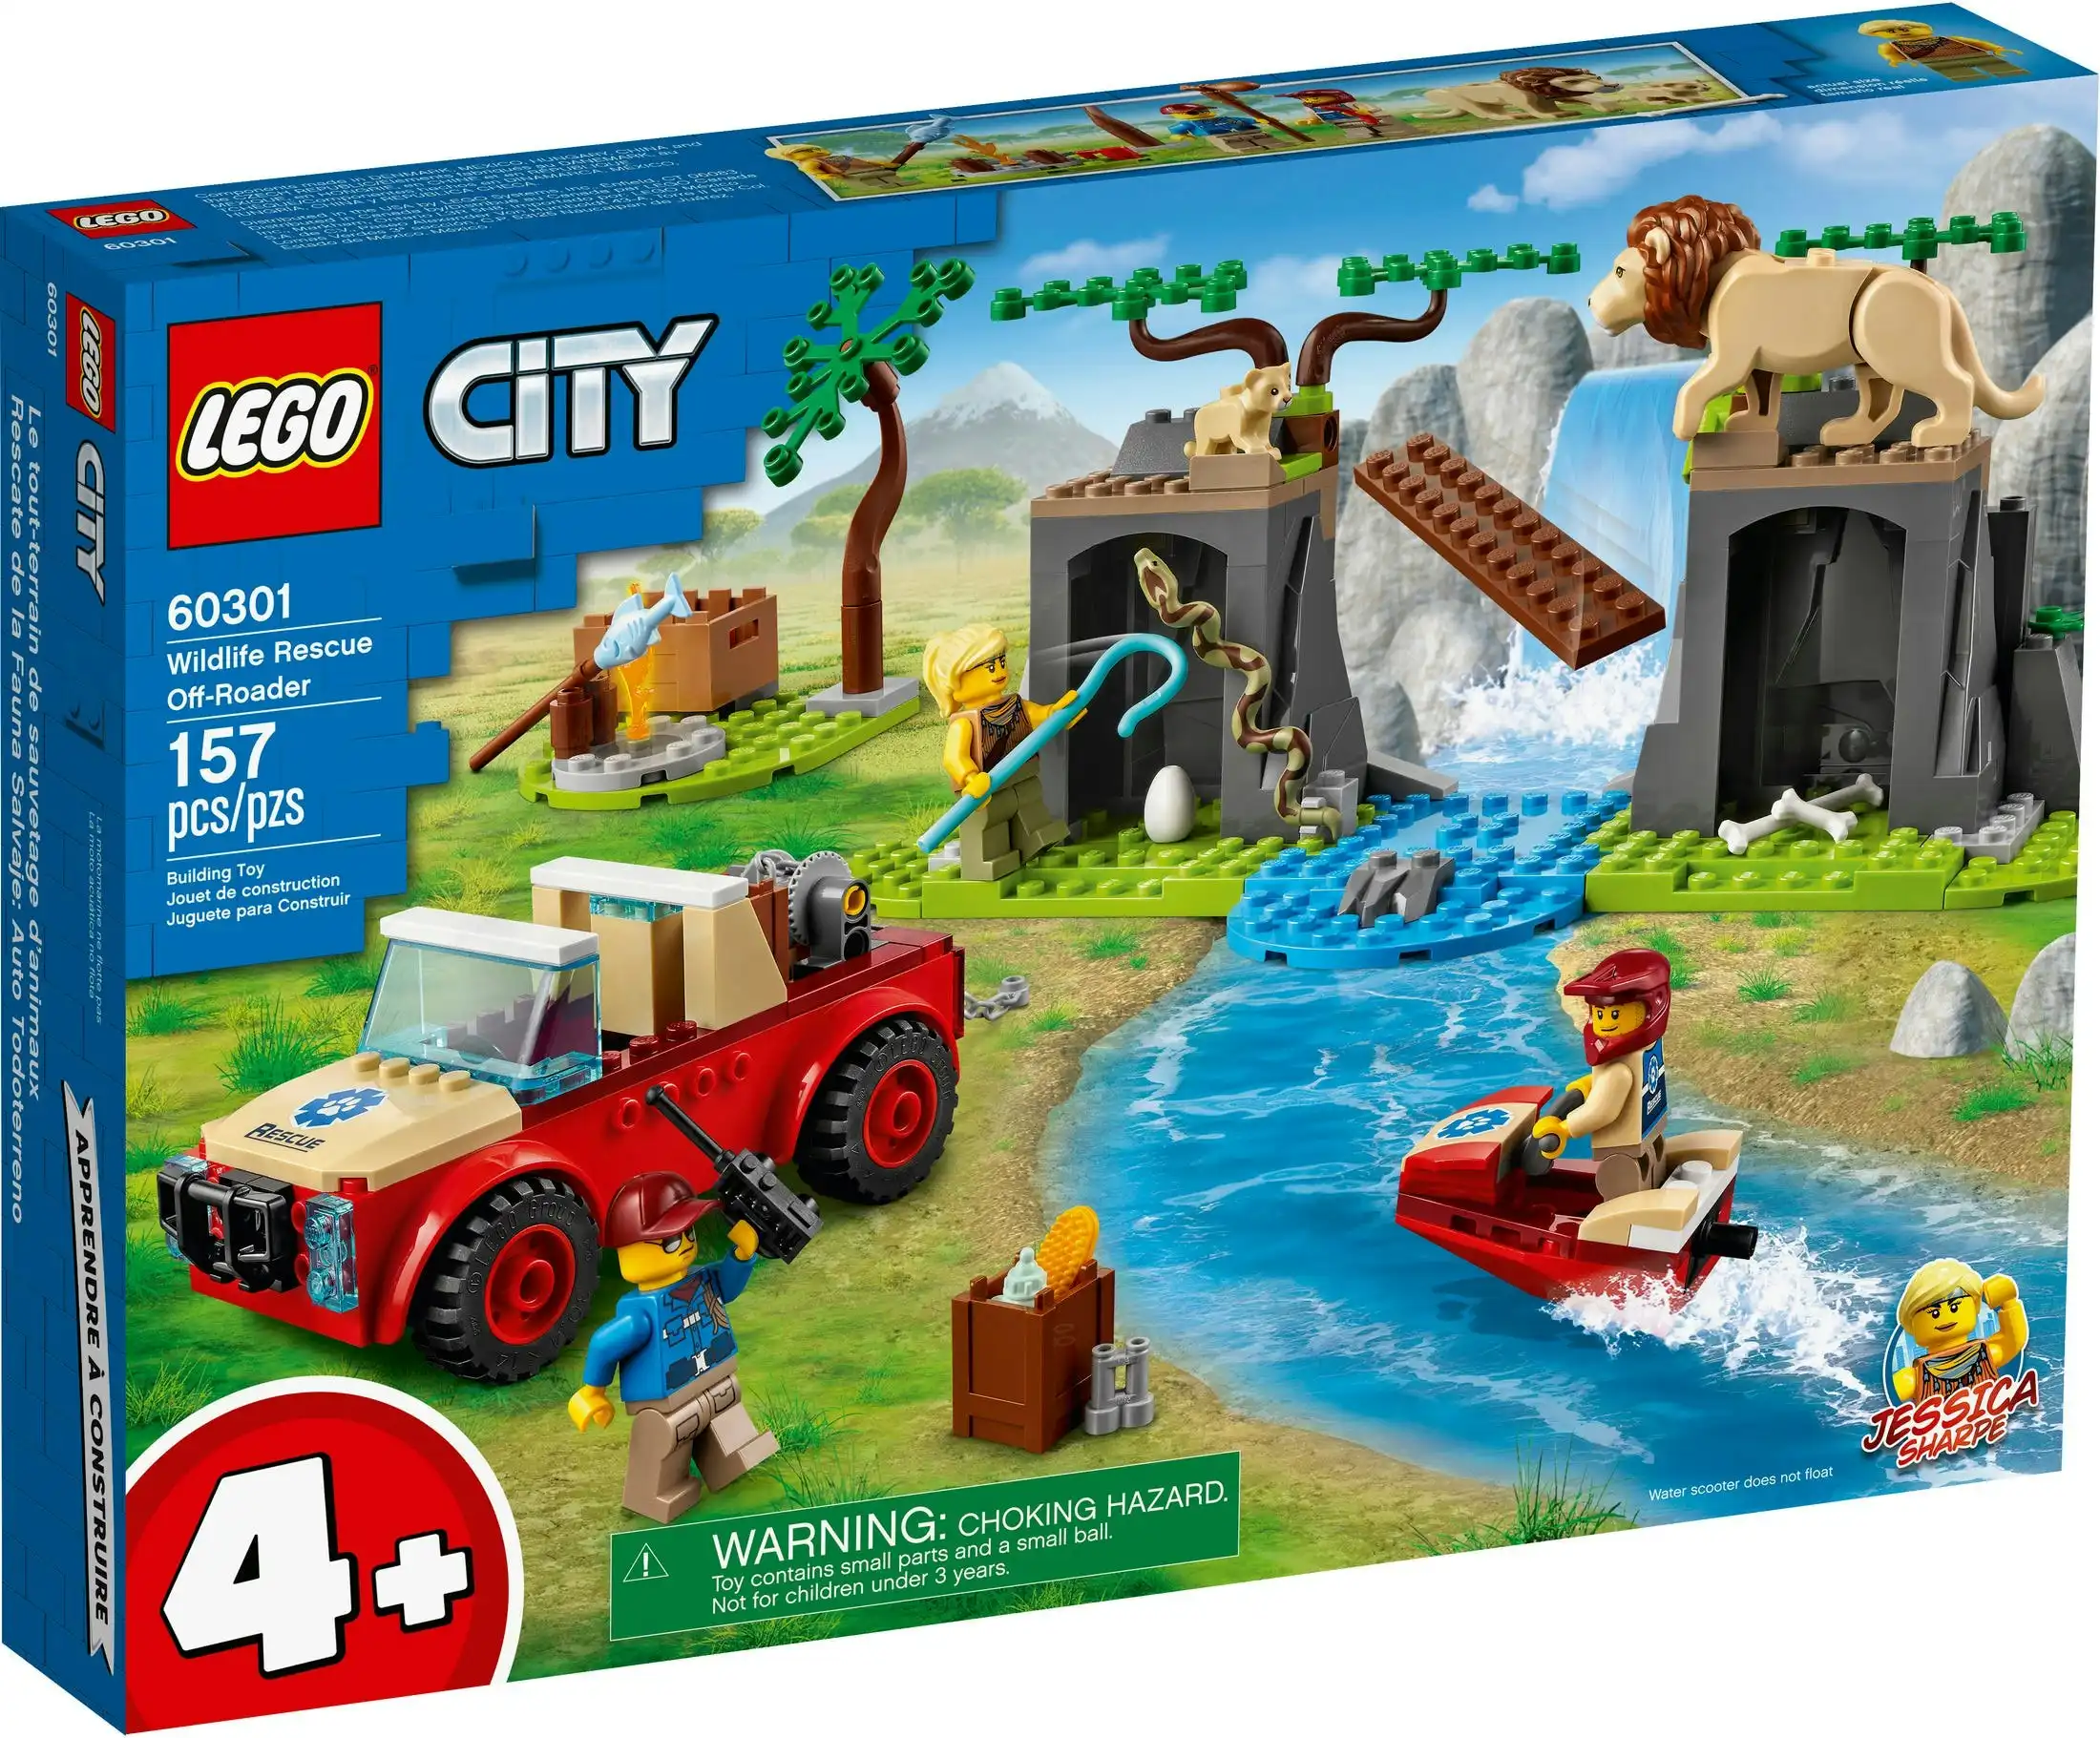 LEGO 60301 Wildlife Rescue Off-Roader - City 4+